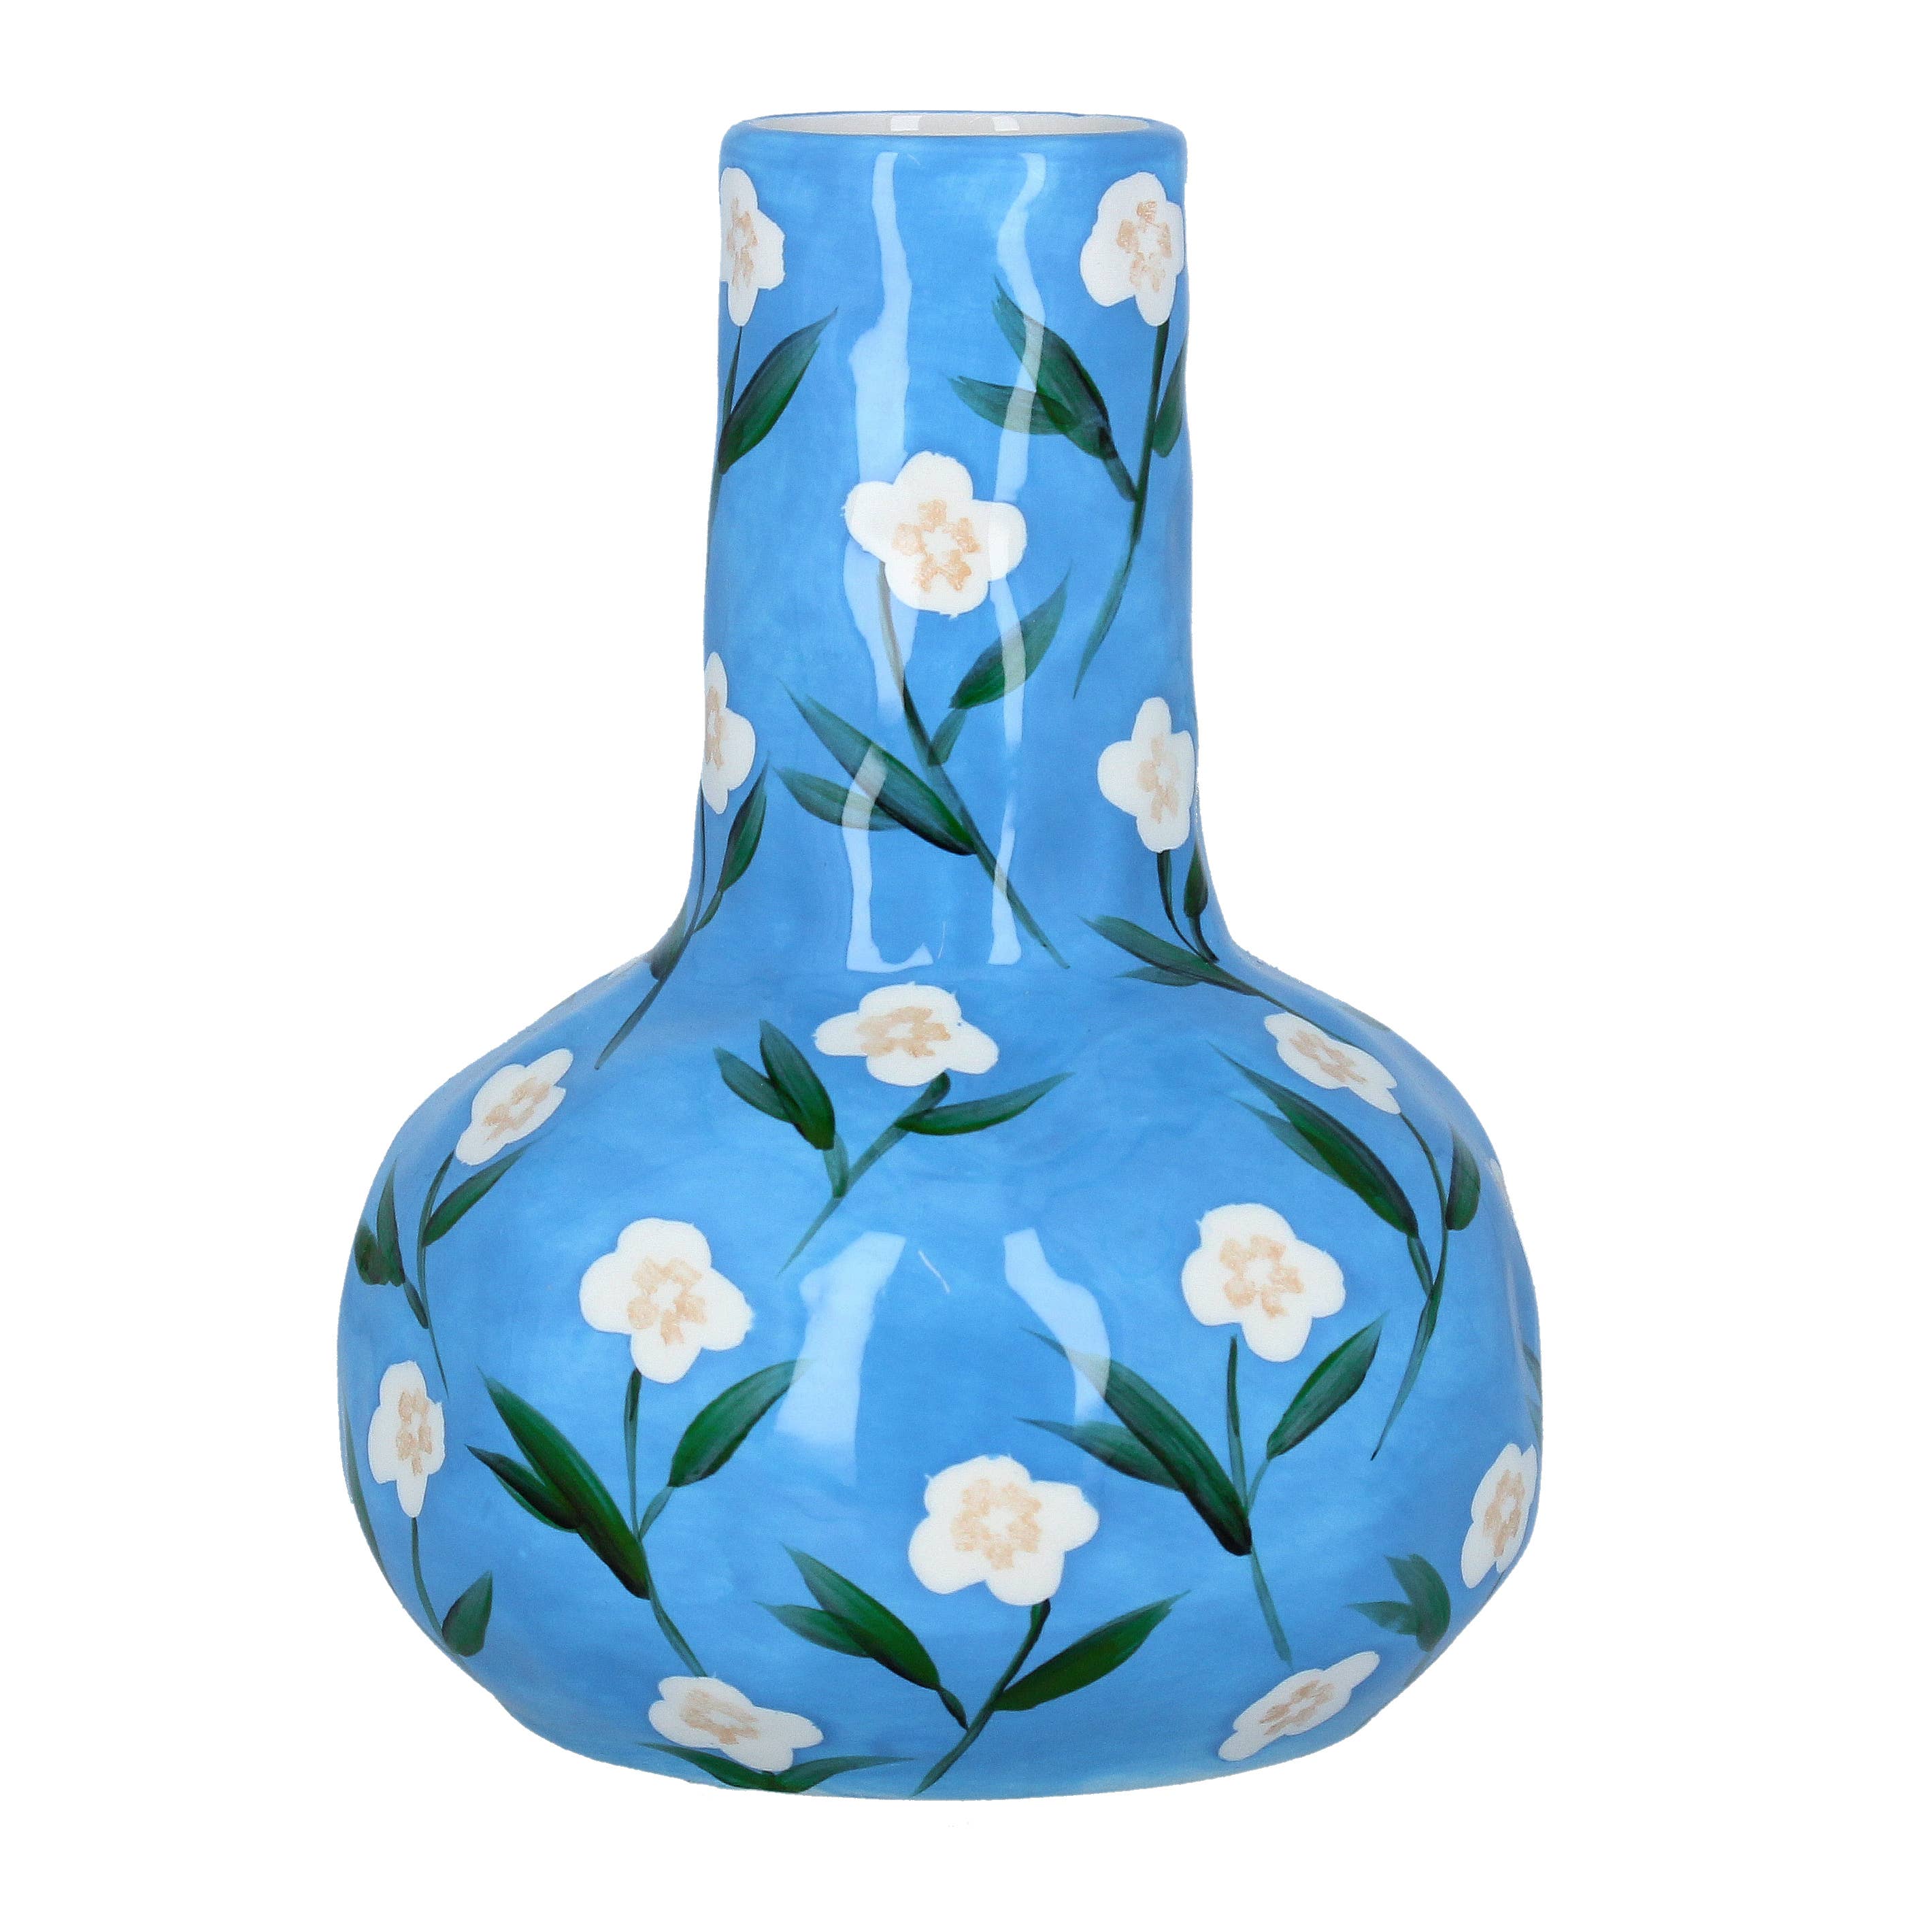 GE32047 Blue Painted Flowers Ceramic Decorative Vase, Lrg